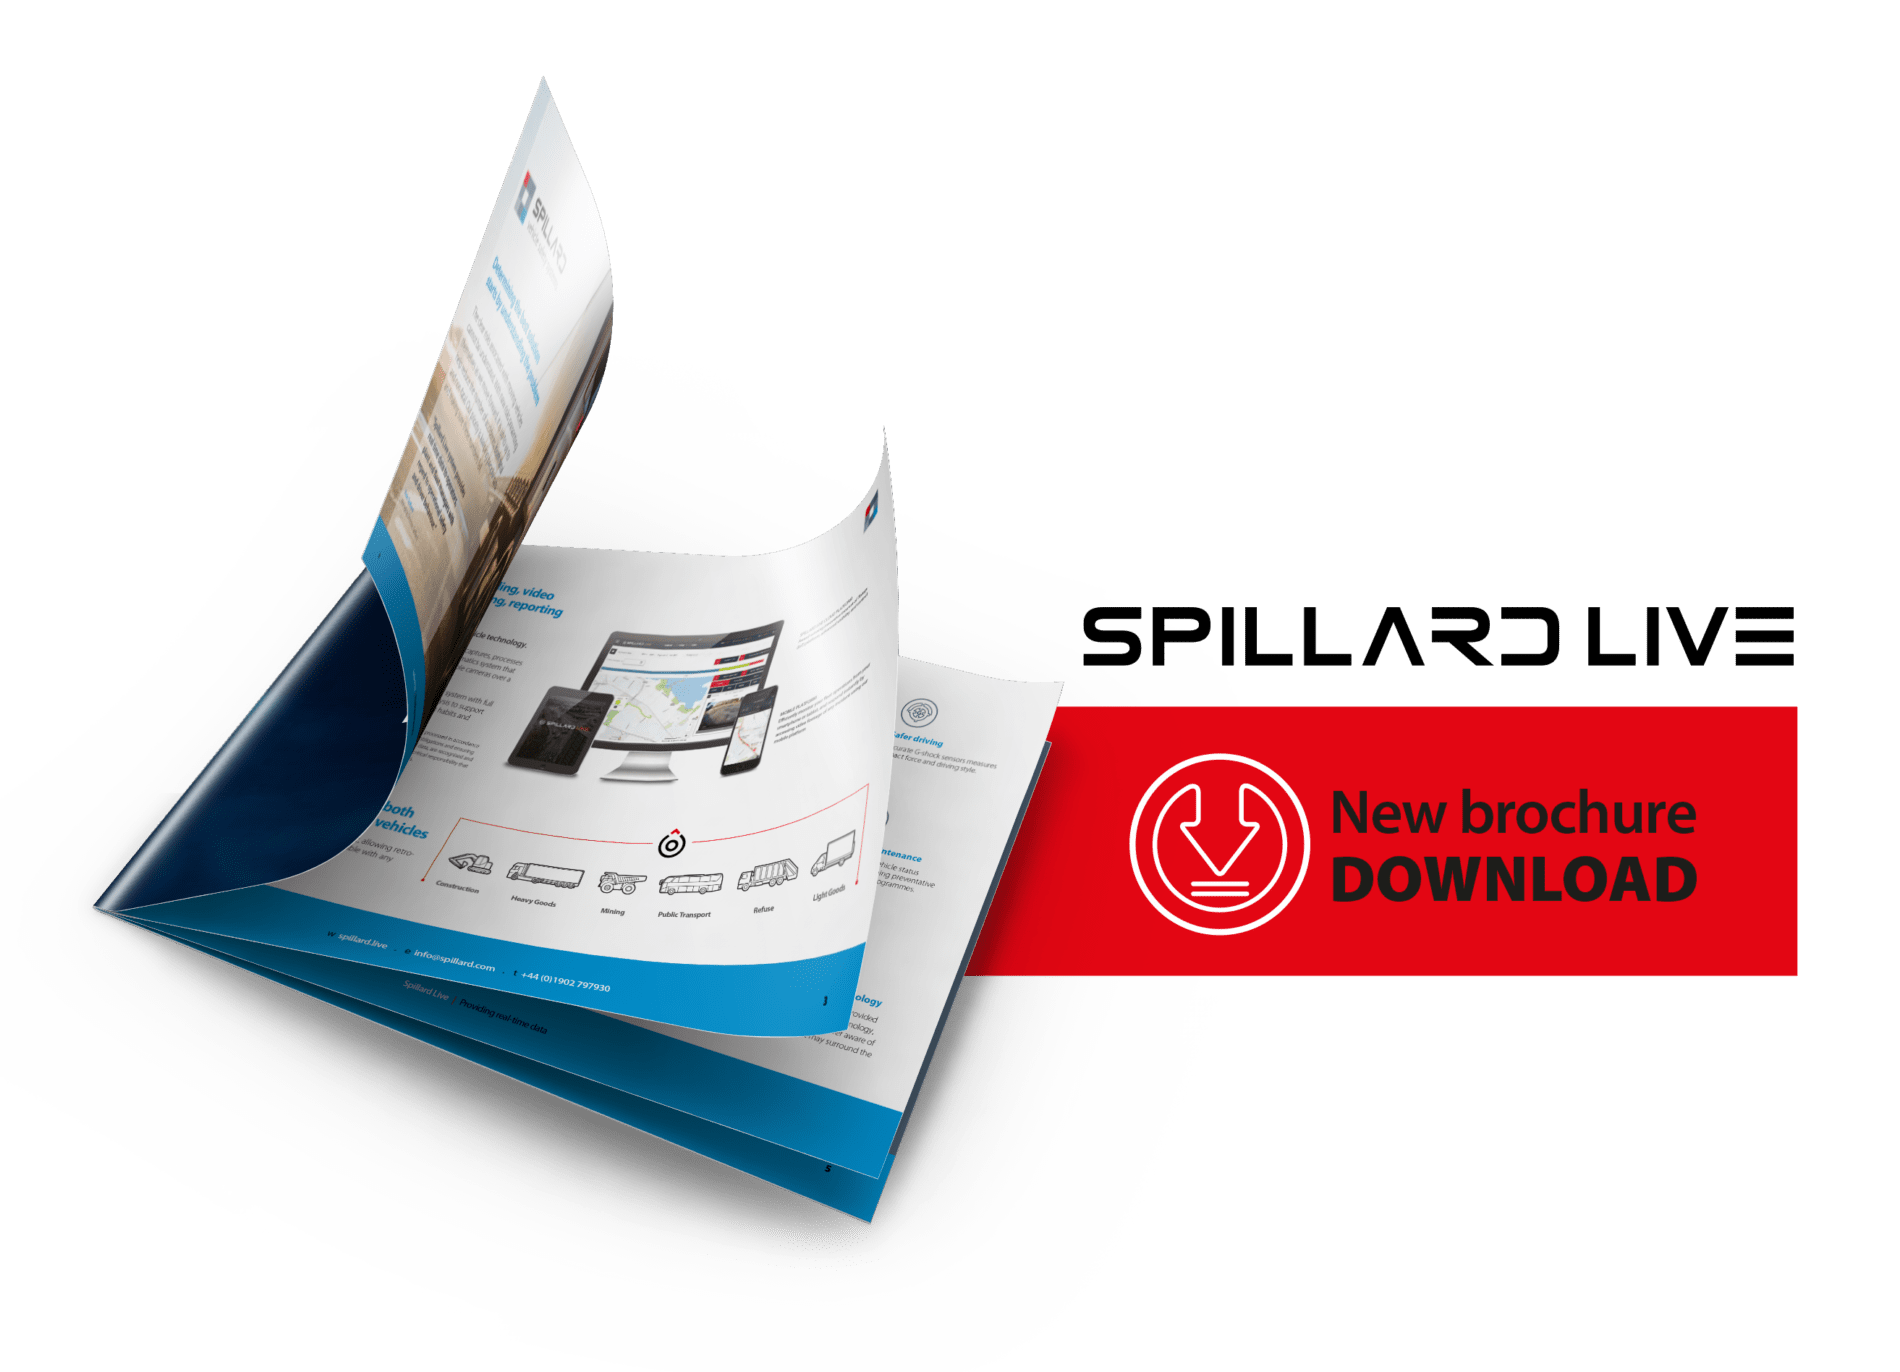 Product Range - A4 Spillard LIVE brochure visual